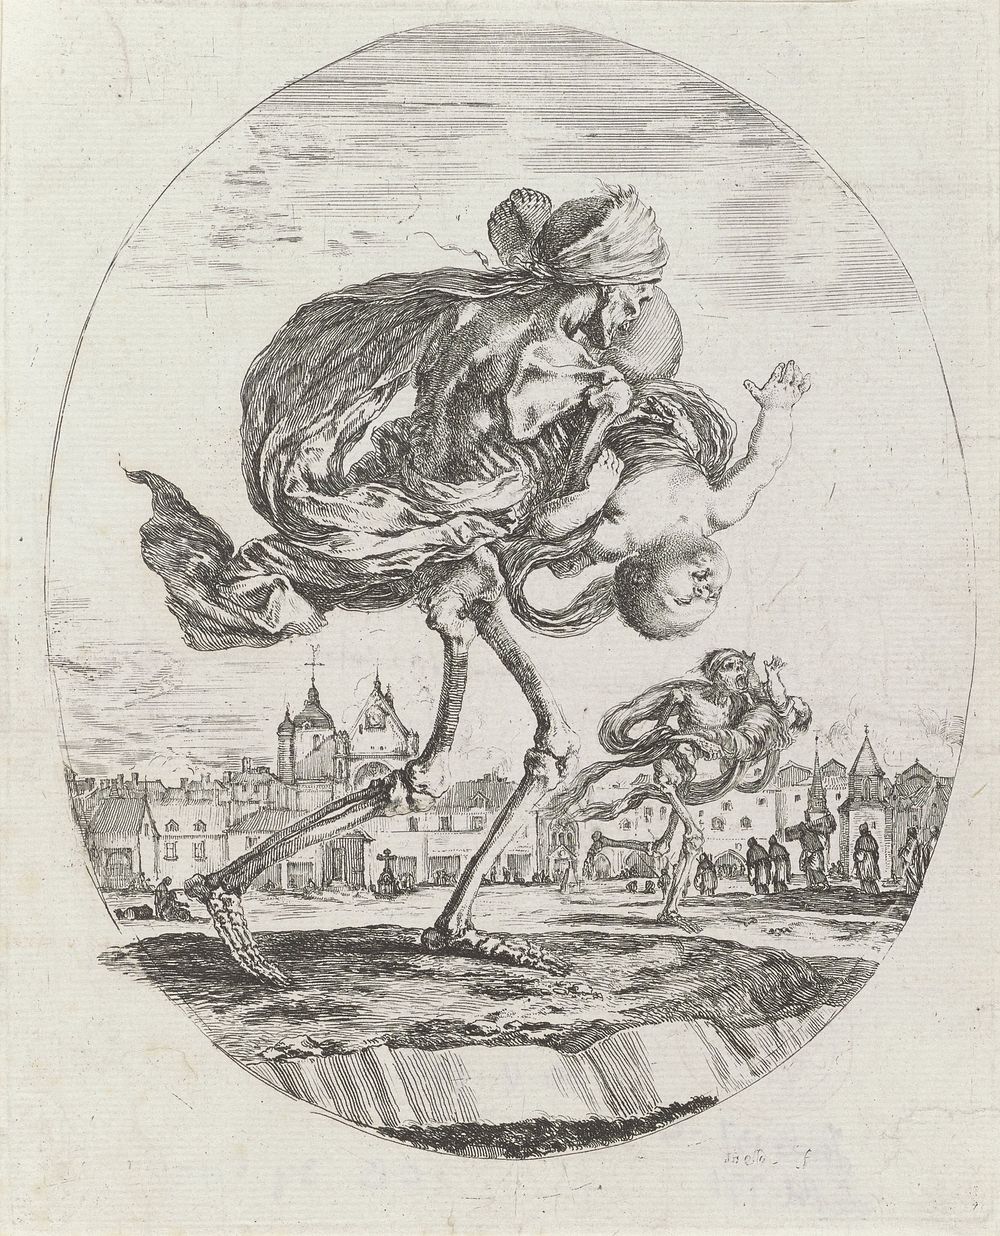 De Dood draagt een kind (1620 - 1664) by Stefano della Bella